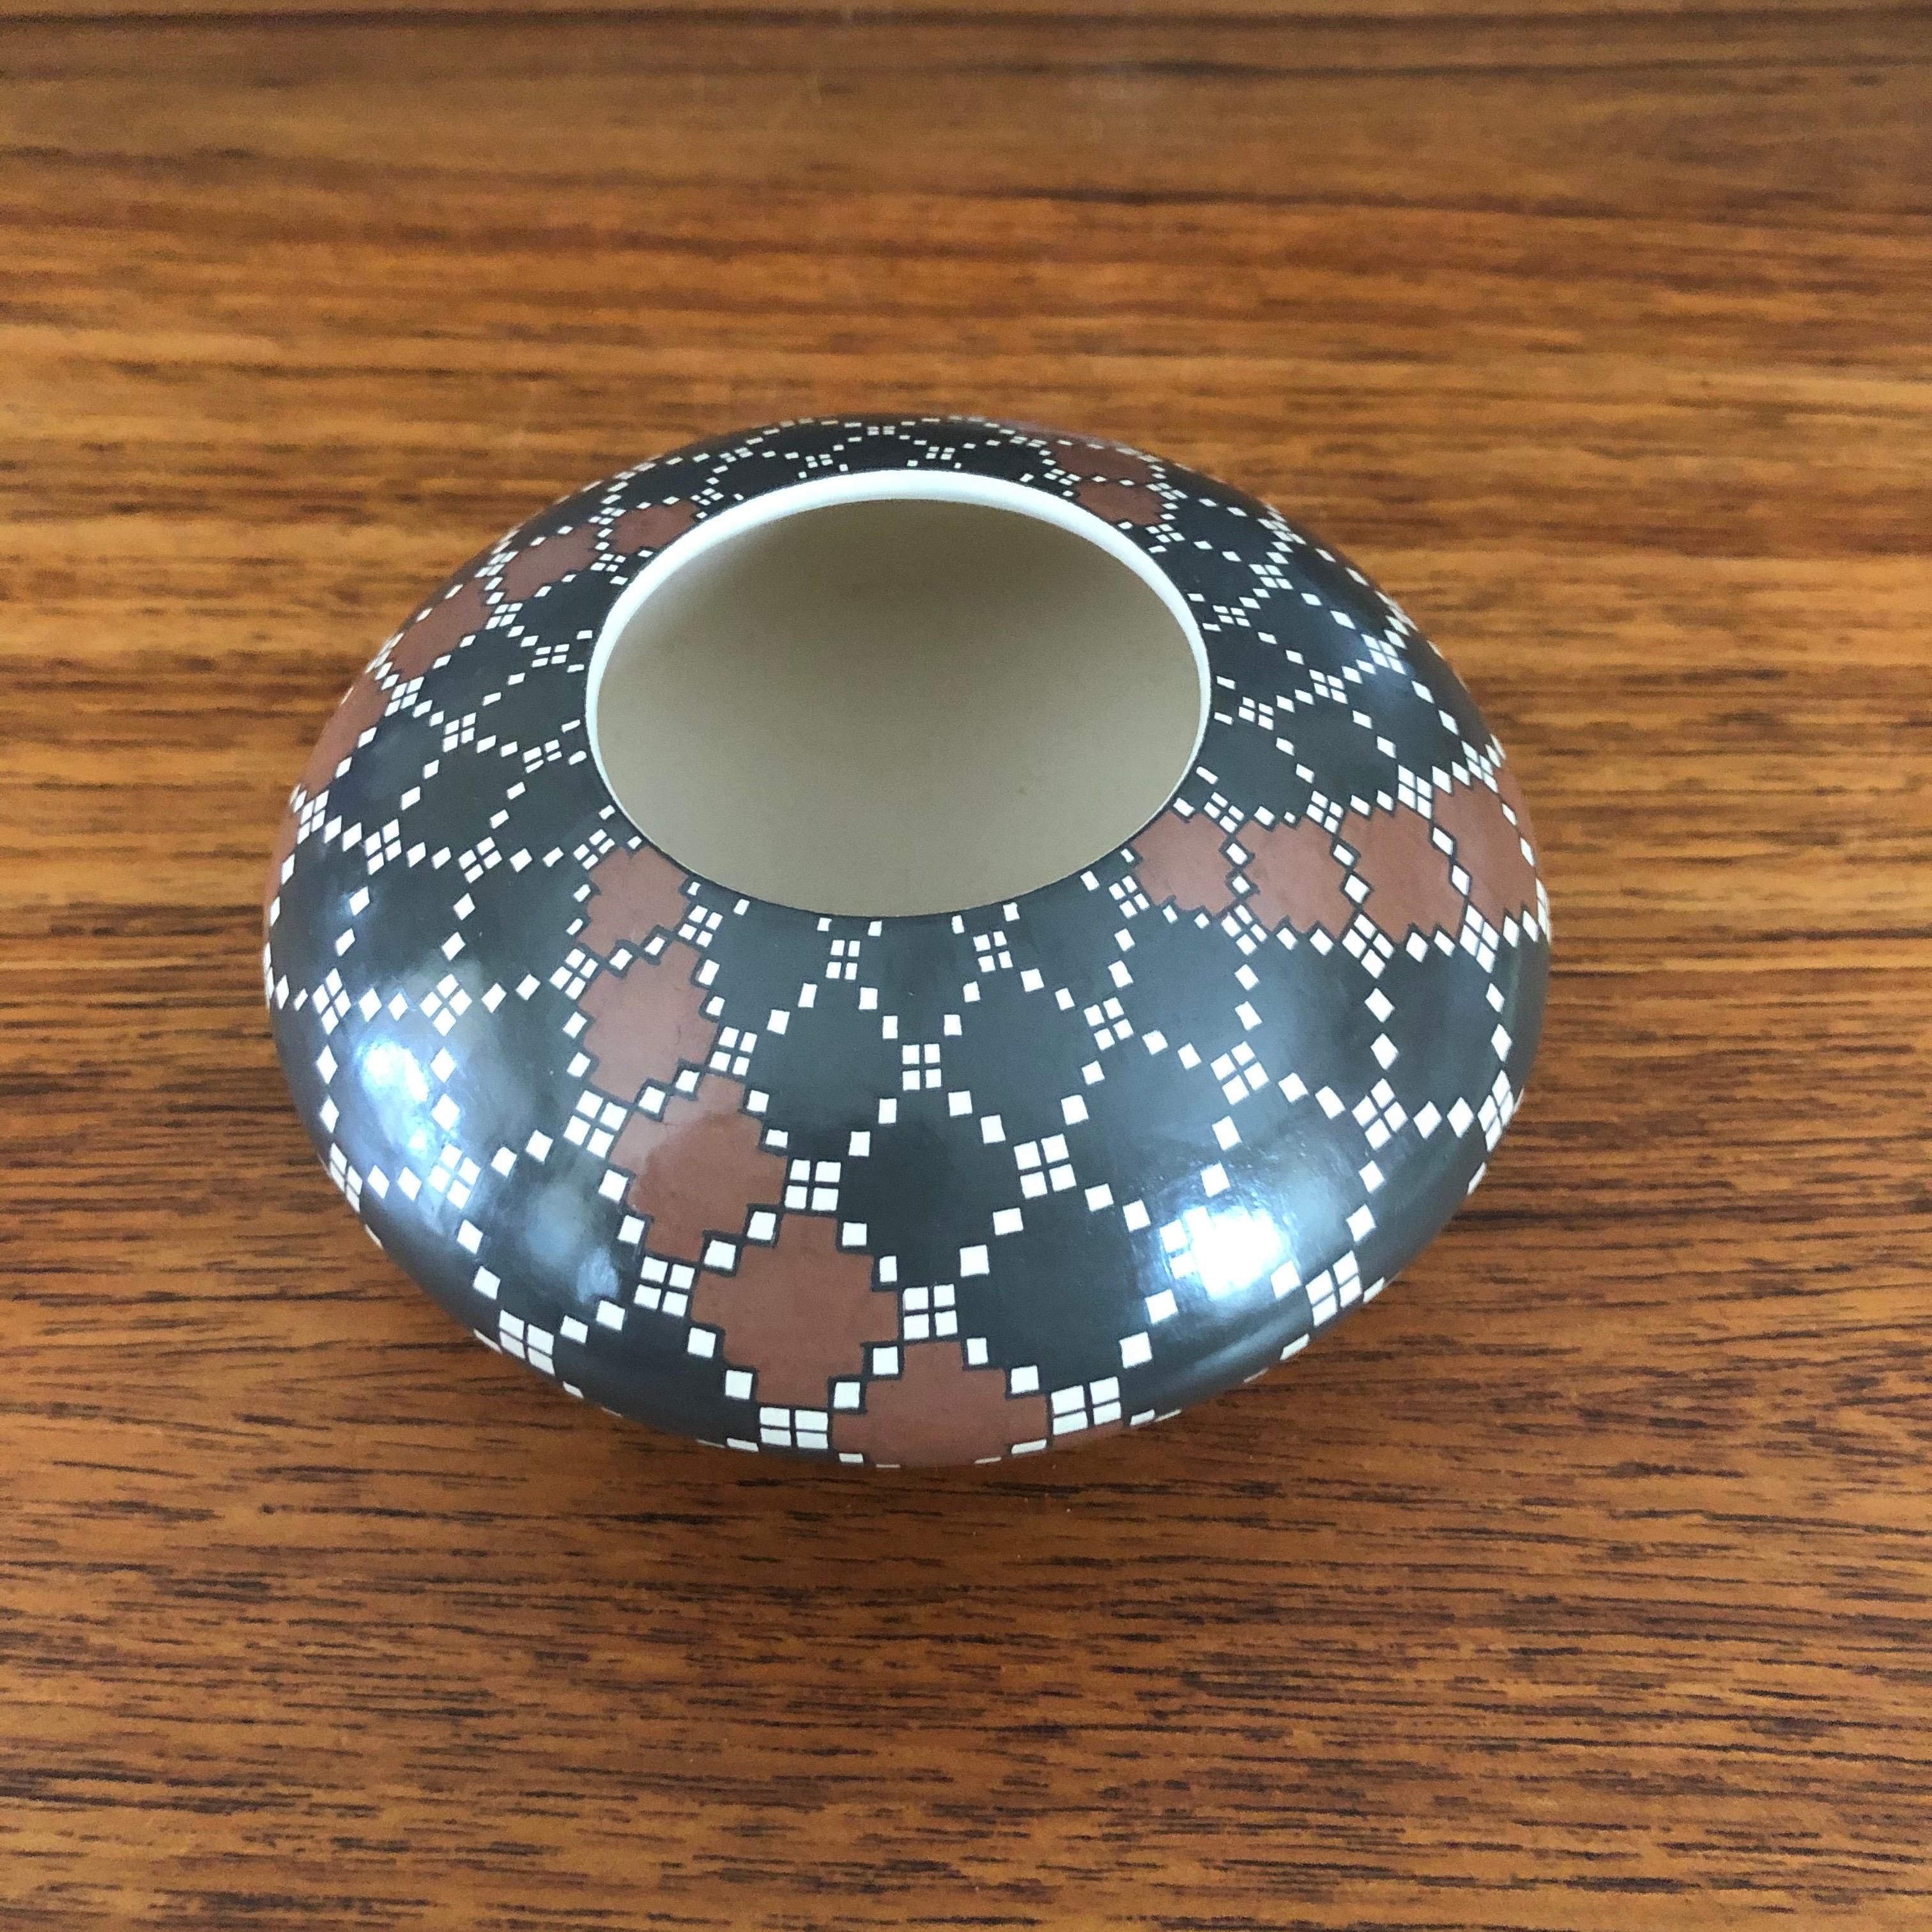 Mata Ortiz Geometric Pottery Vase by Juana Ledezma Vecoz For Sale 1